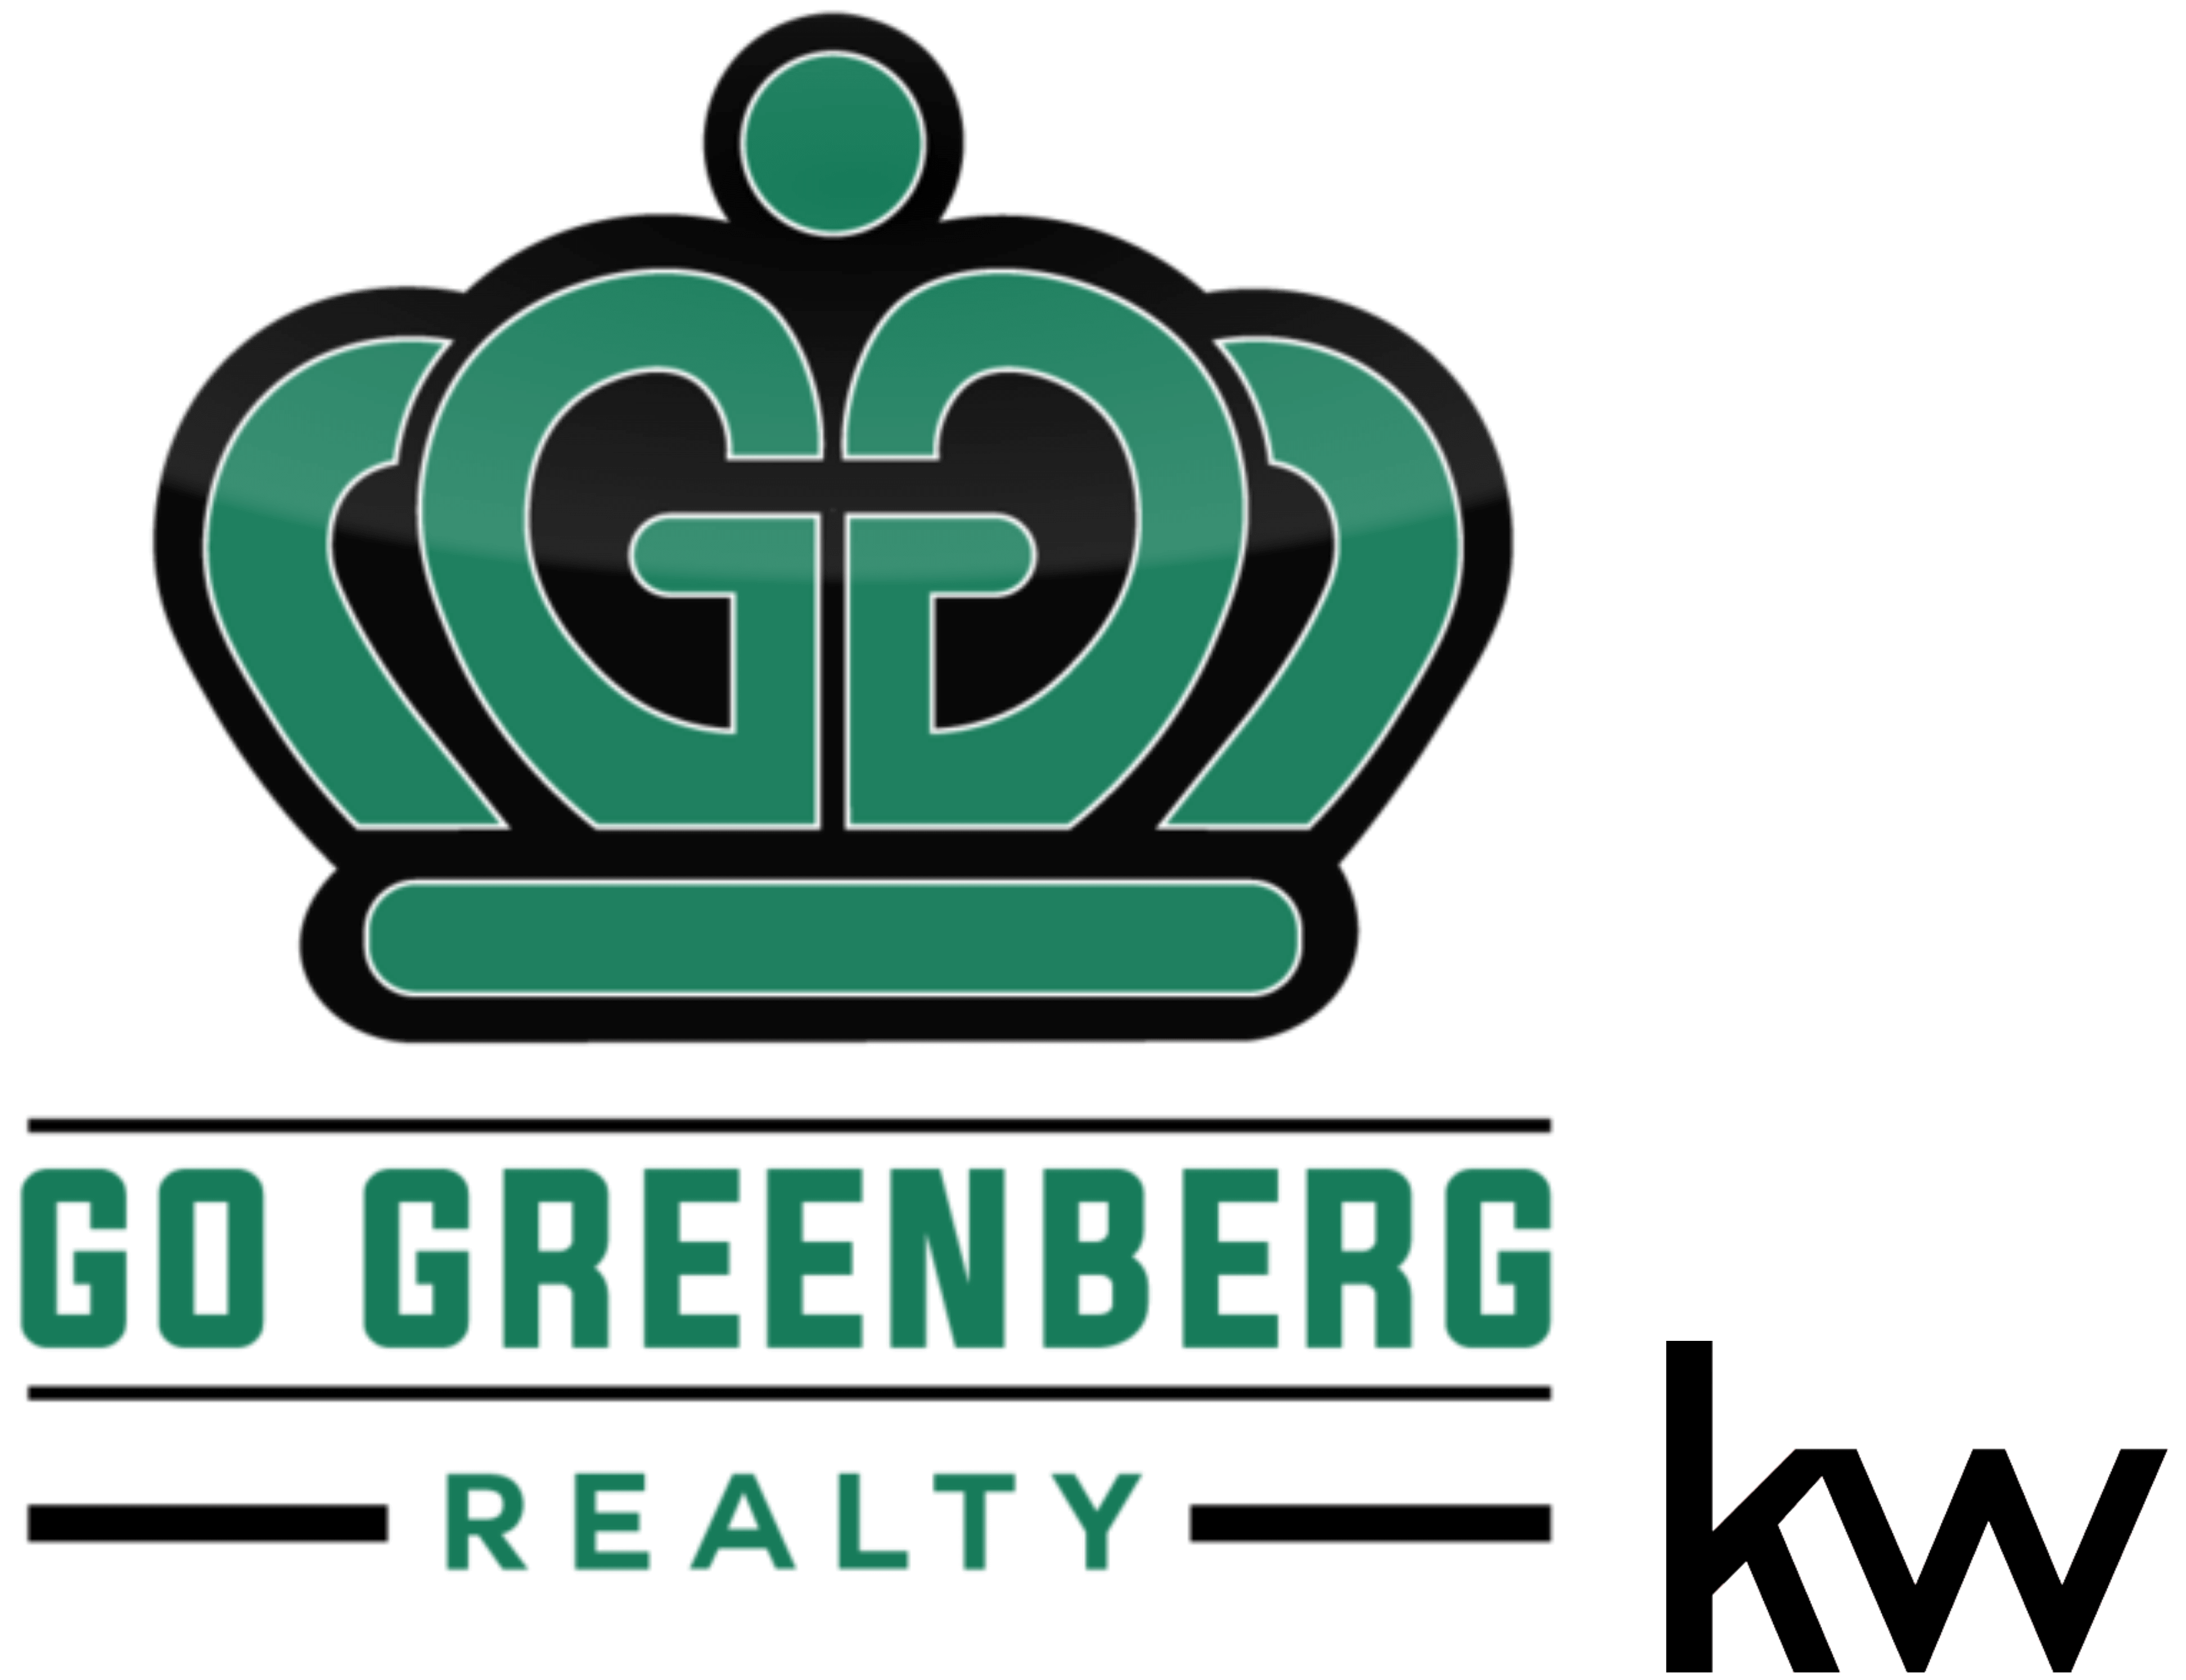 Go Greenberg Realty